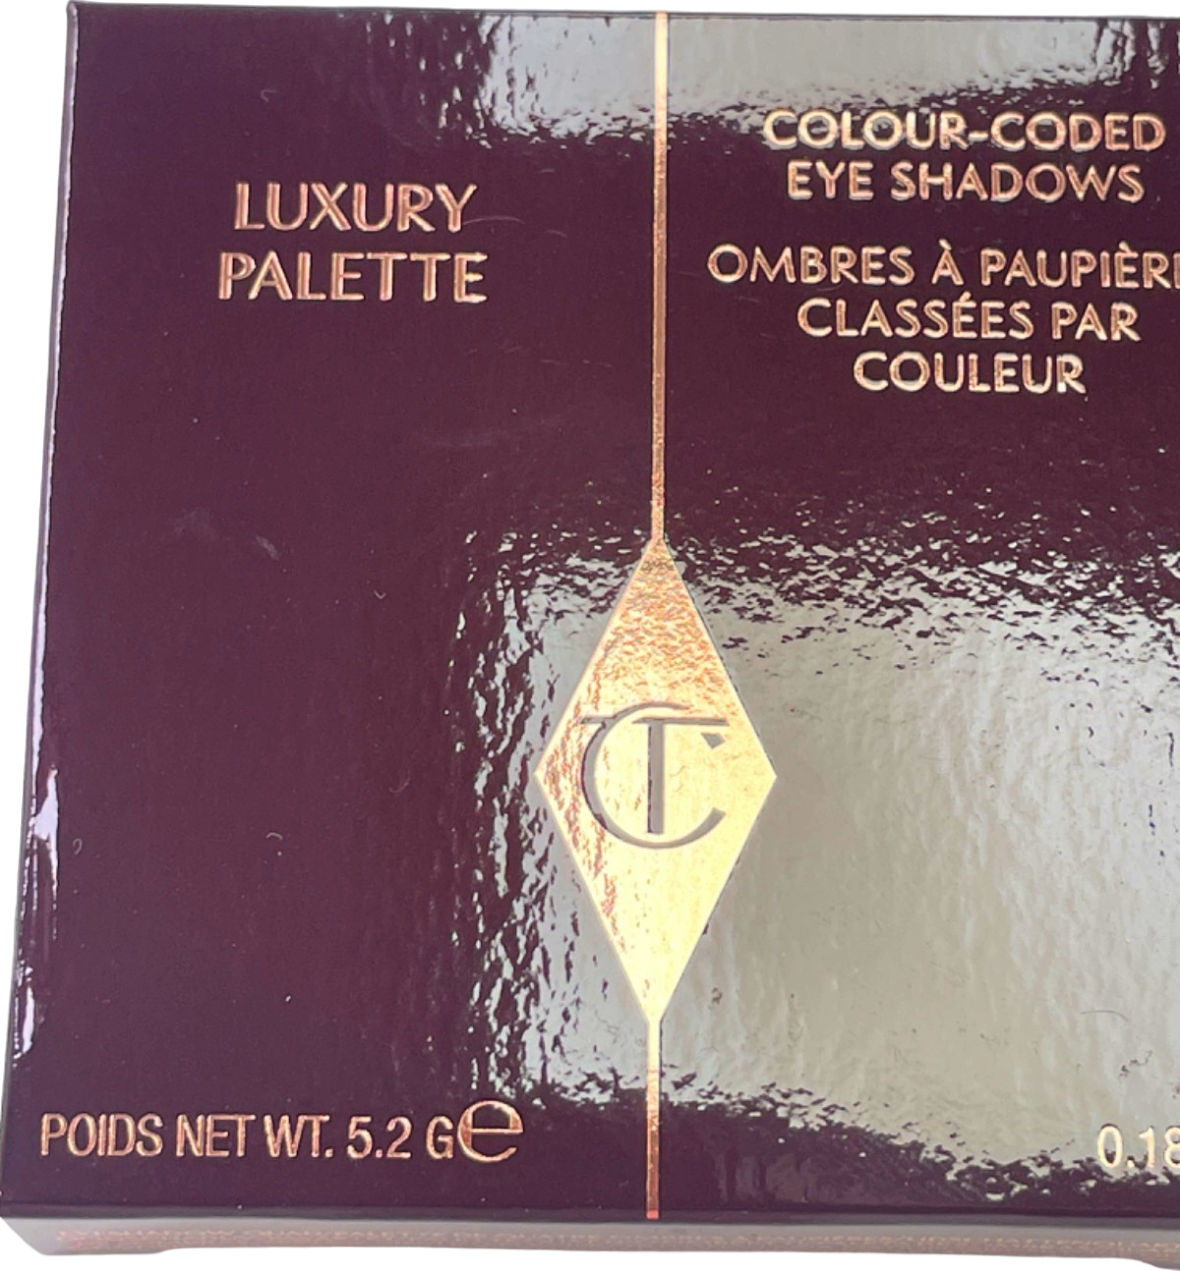 Charlotte Tilbury Luxury Palette The Sophisticate 5.2g